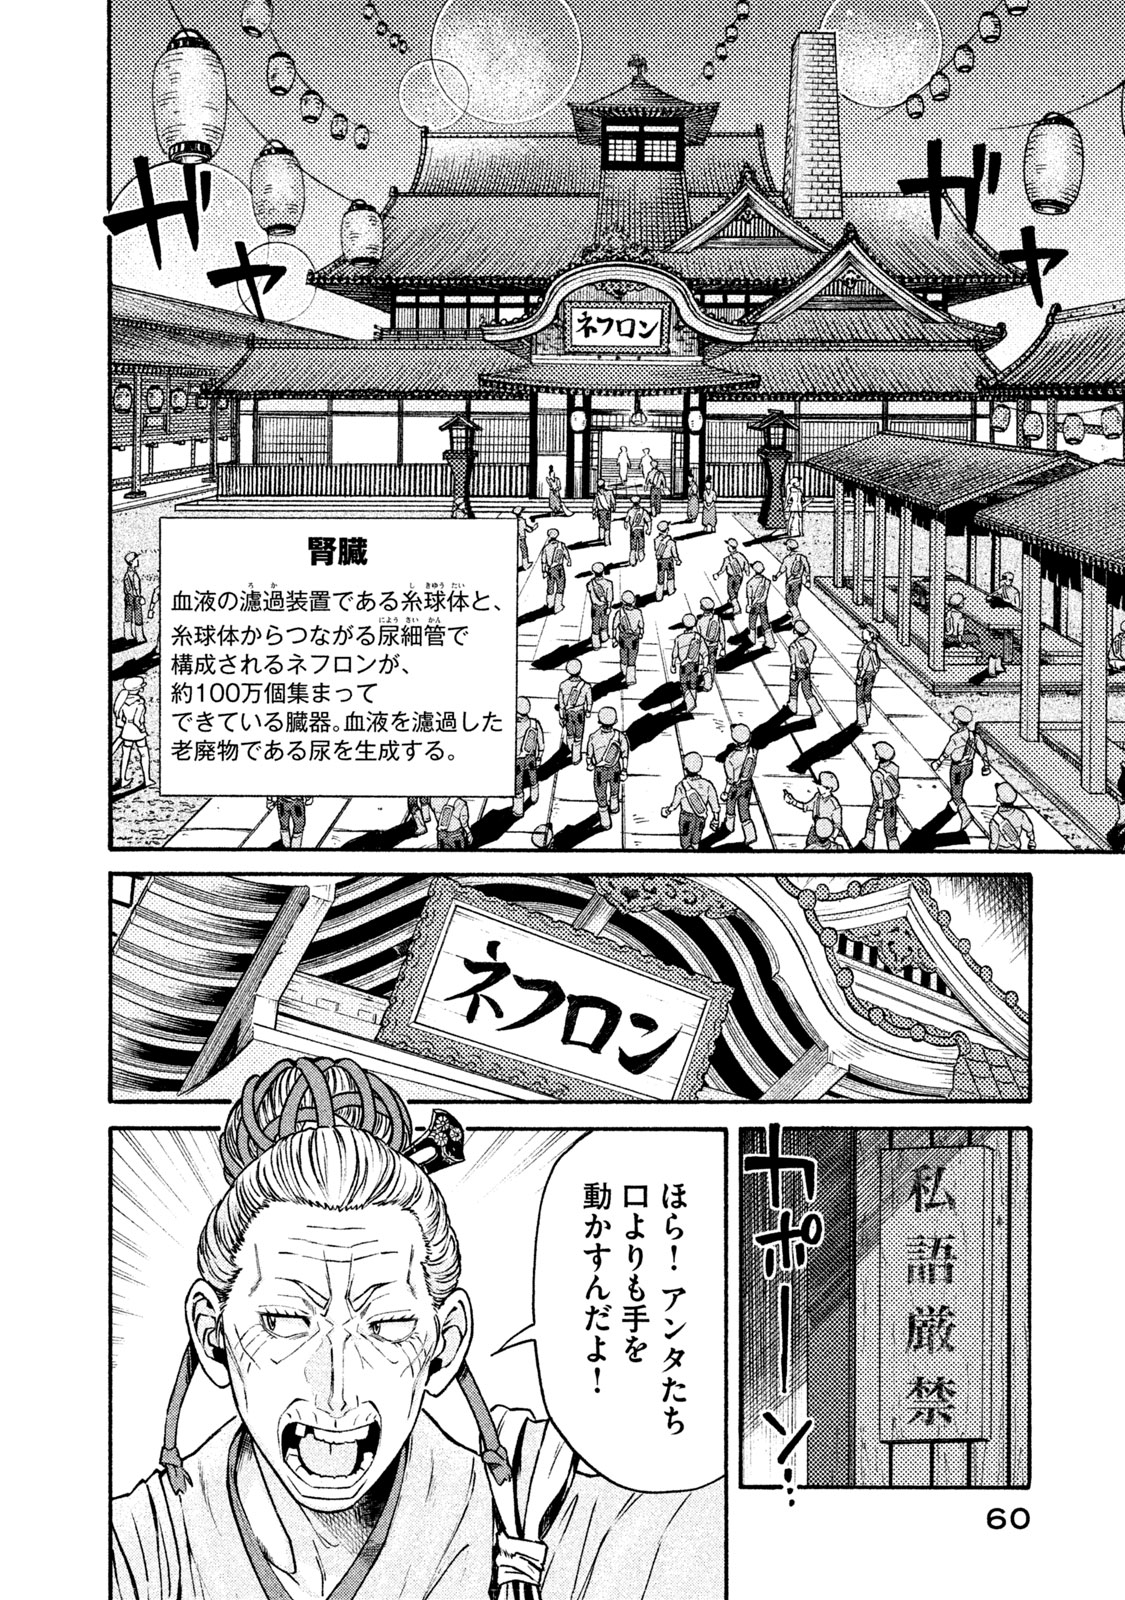 Hataraku Saibou BLACK - Chapter 13 - Page 4